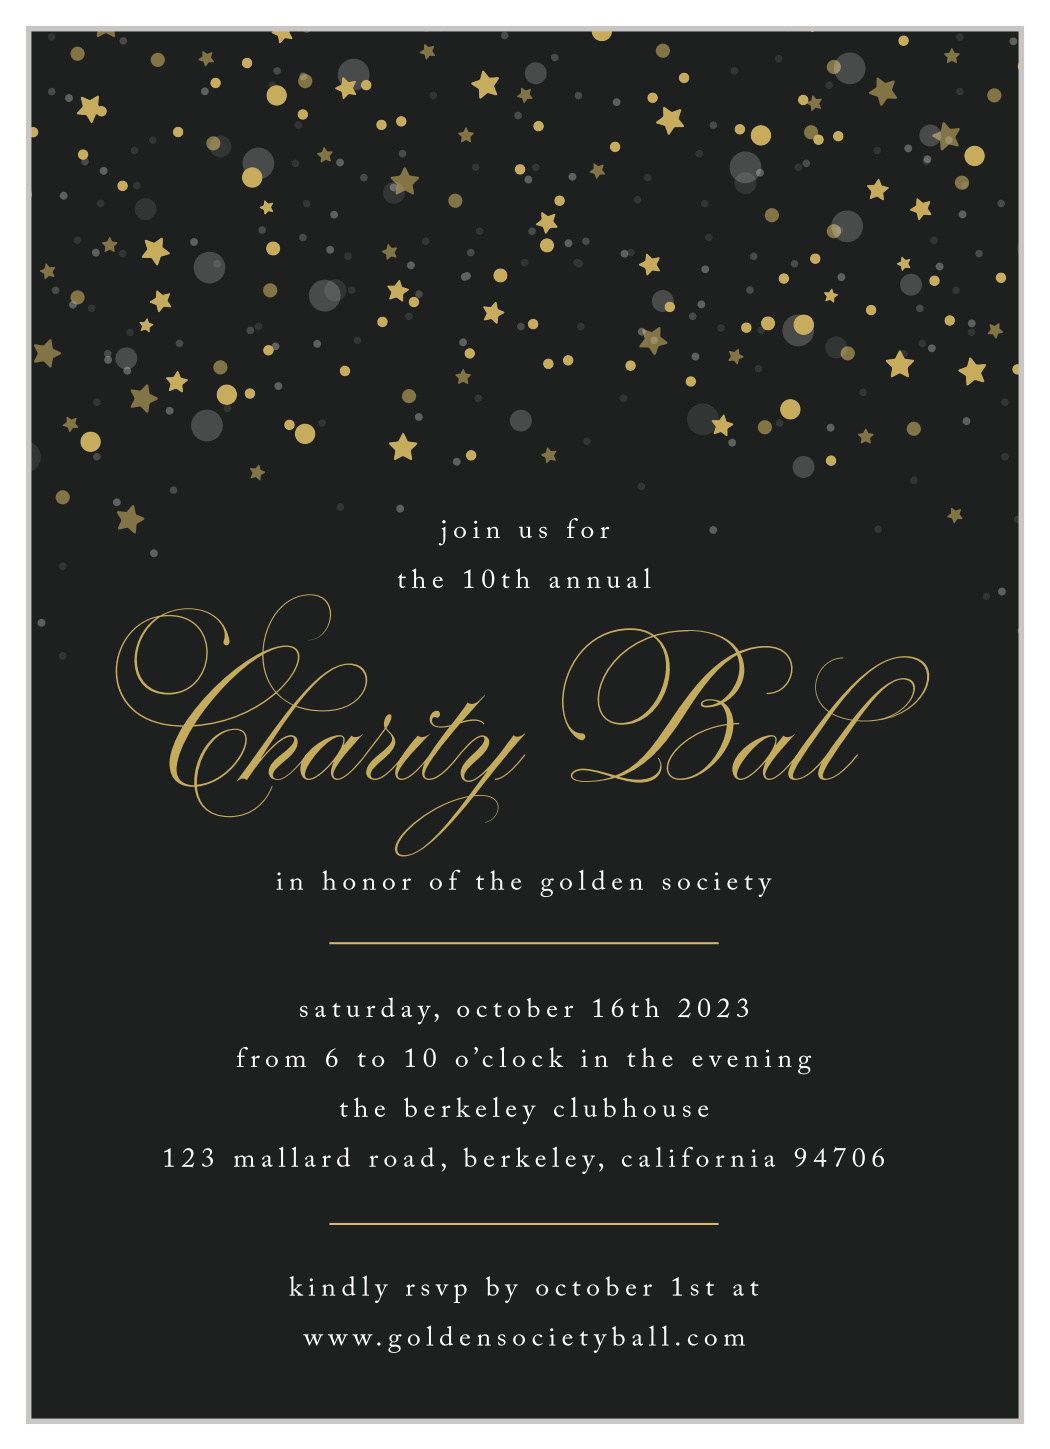 Starry Ball Gala Invitations